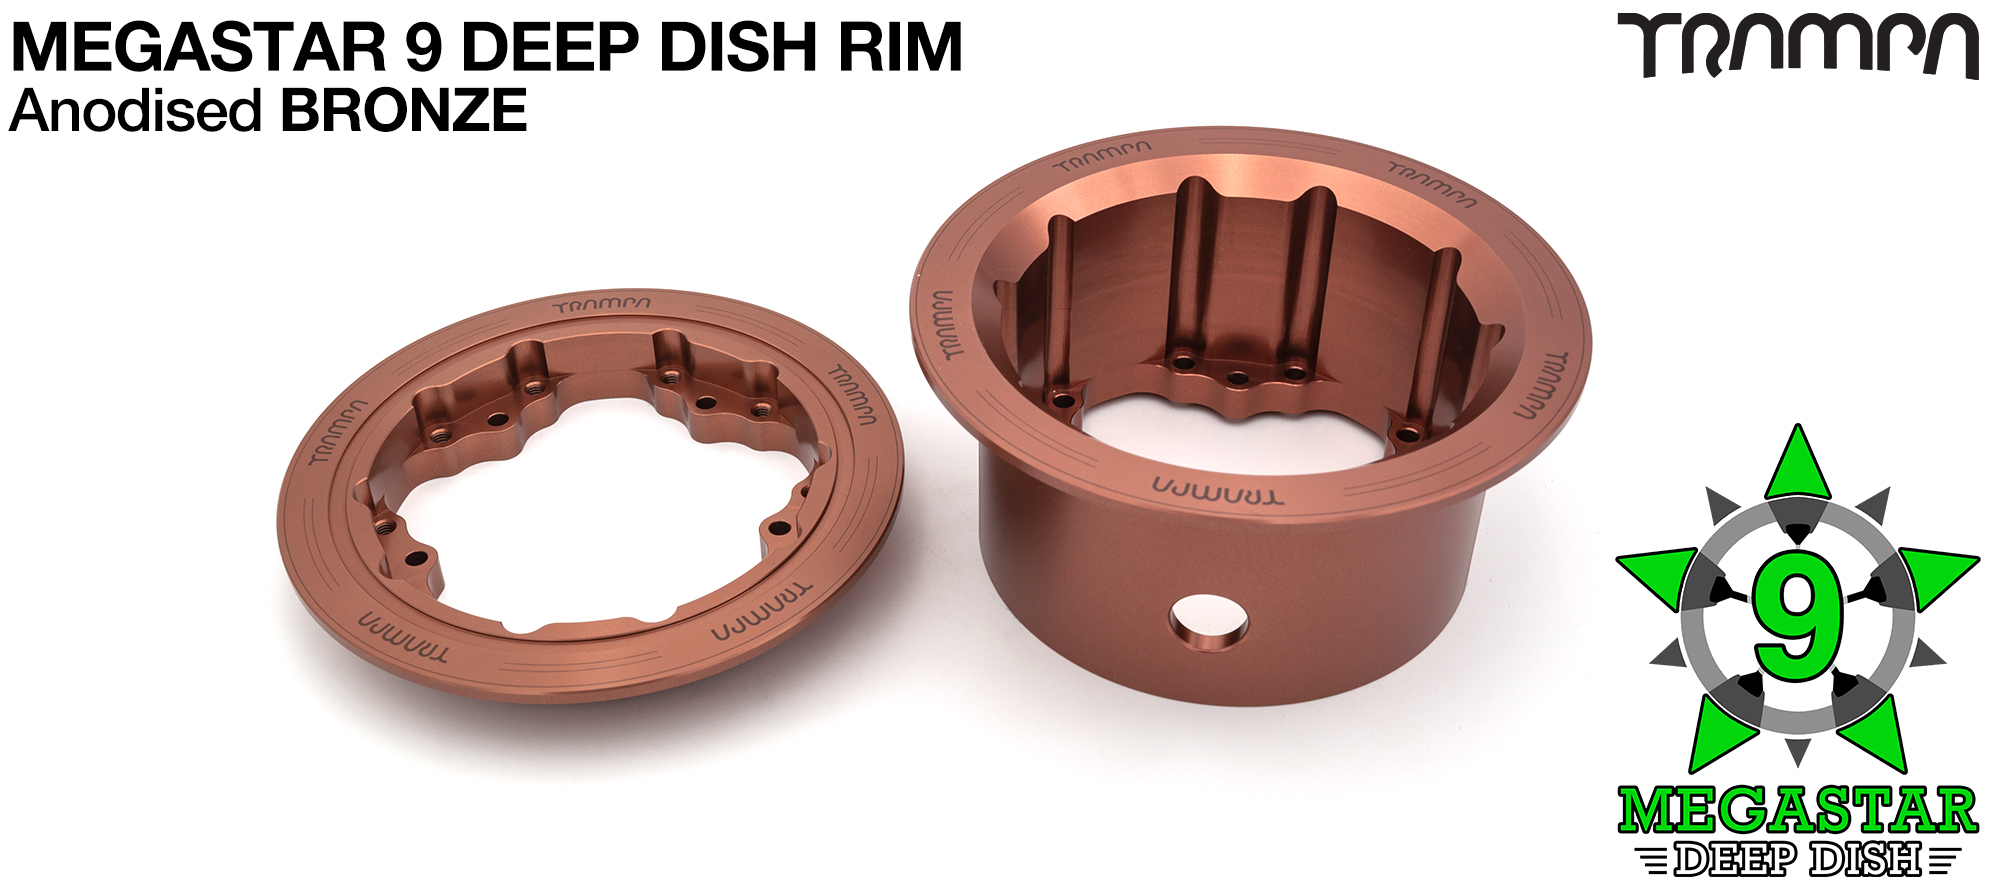 3.75/4x 3 inch DEEP-DISH MEGASTAR 9 Rims - BRONZE